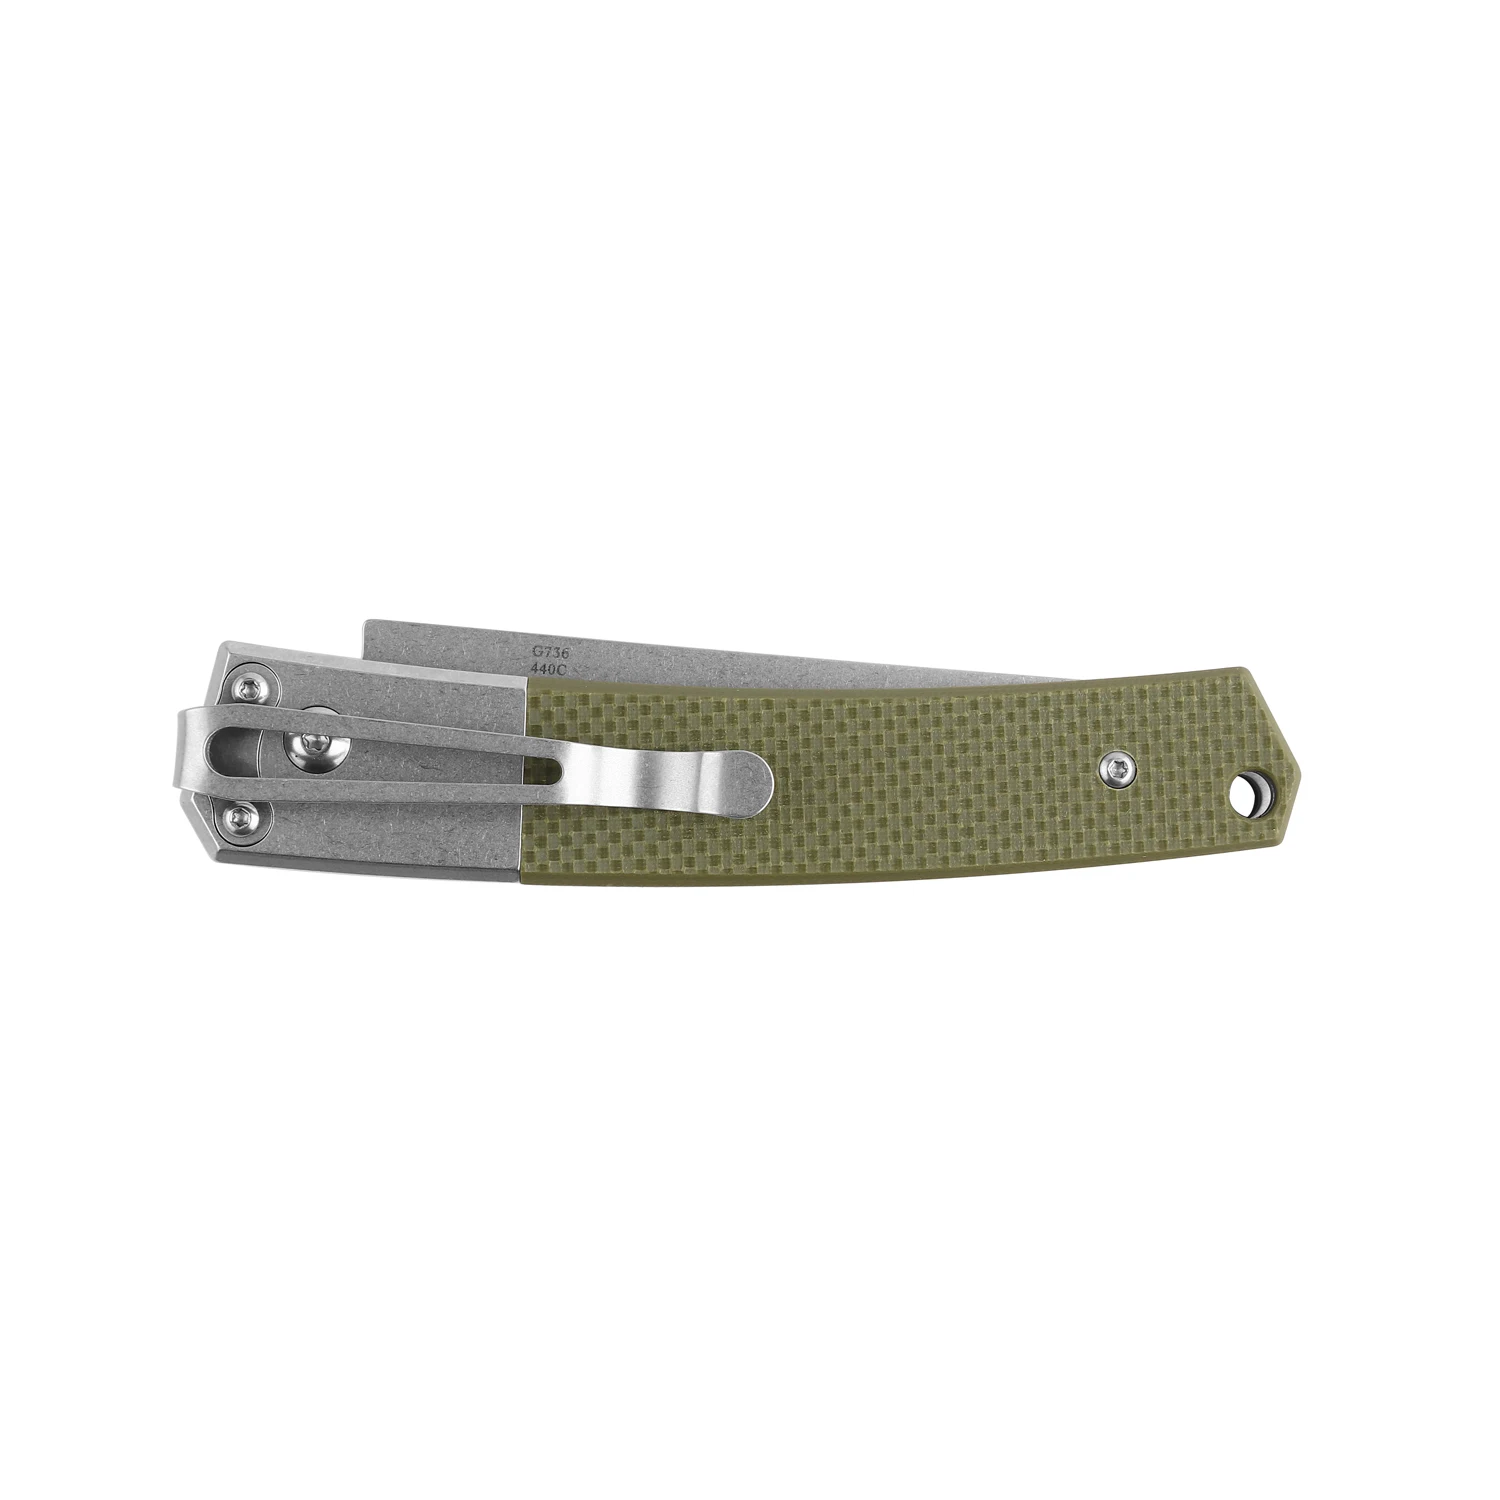 Ganzo-cuchillo plegable con mango G7362 F7362 58-60HRC 440C G10, herramienta de supervivencia al aire libre, campamento, cuchillo de bolsillo de caza edc